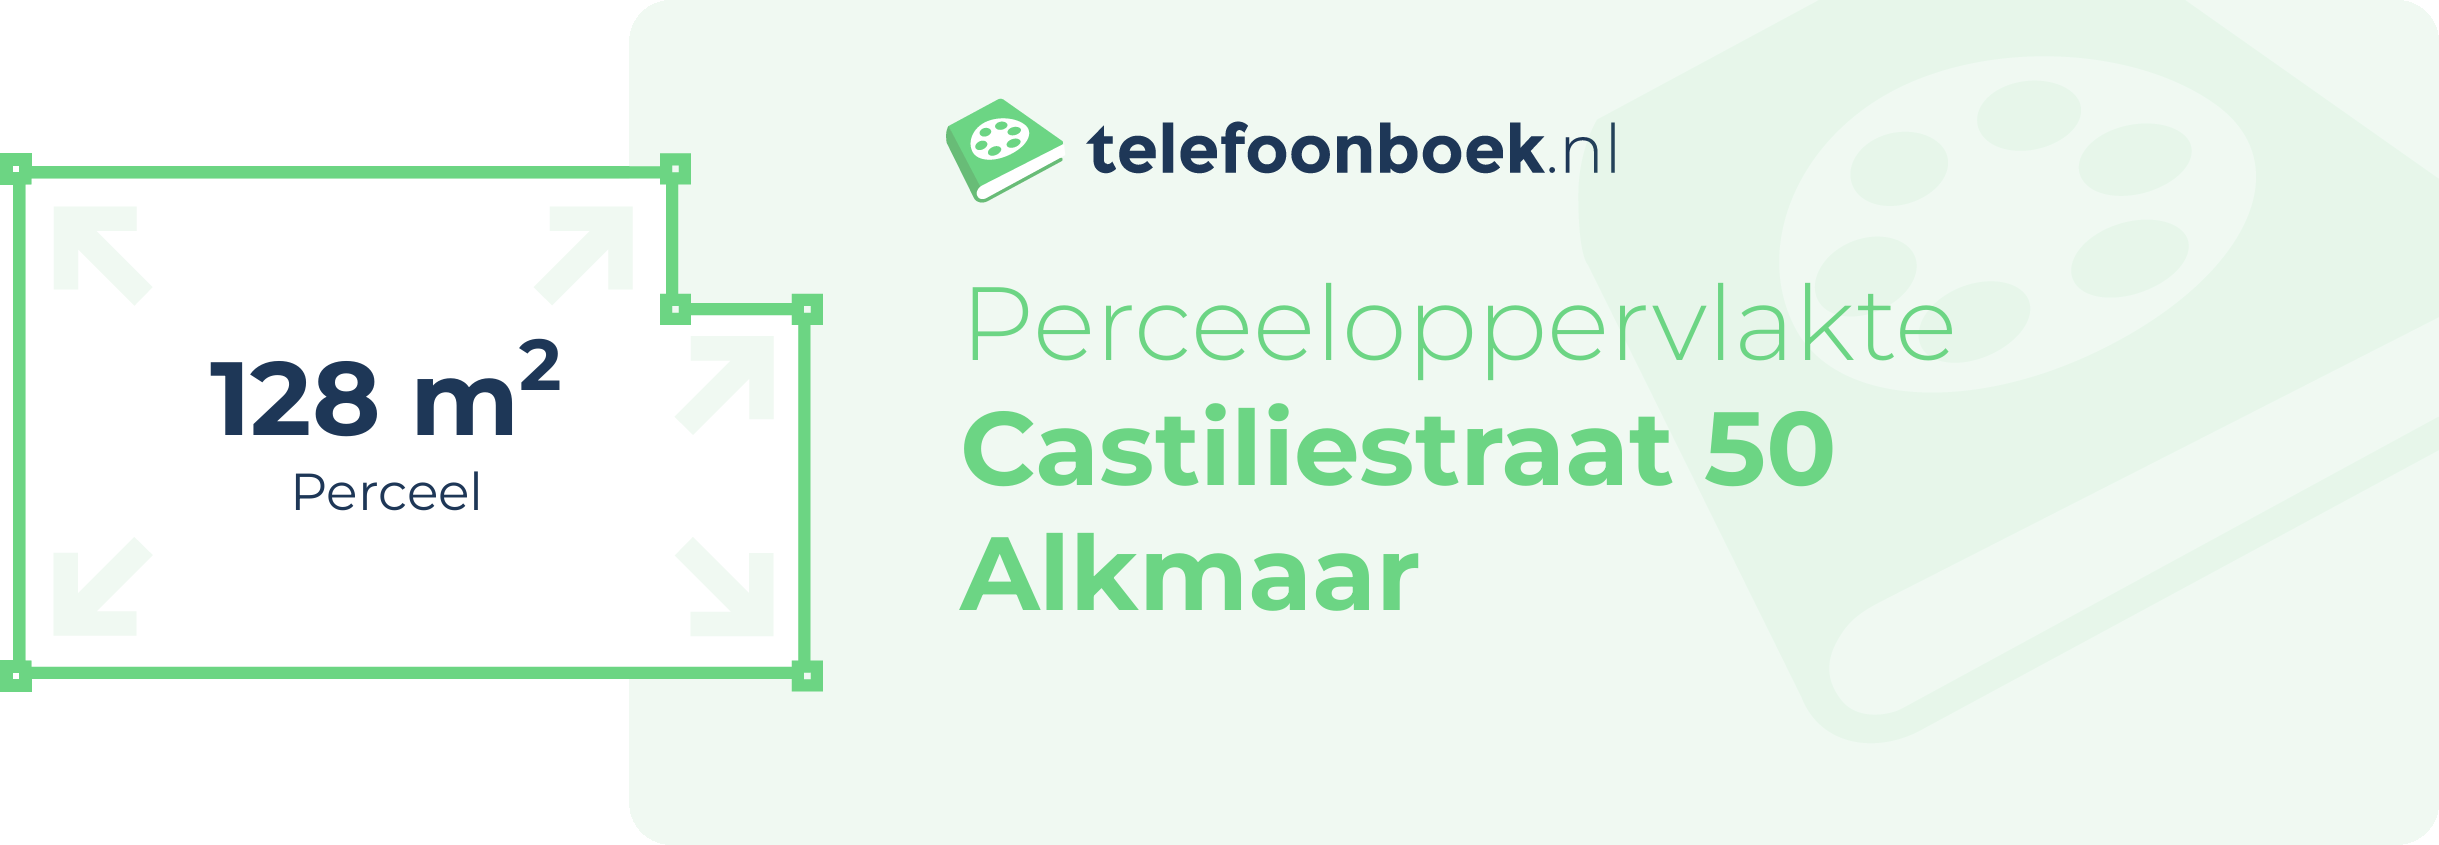 Perceeloppervlakte Castiliestraat 50 Alkmaar